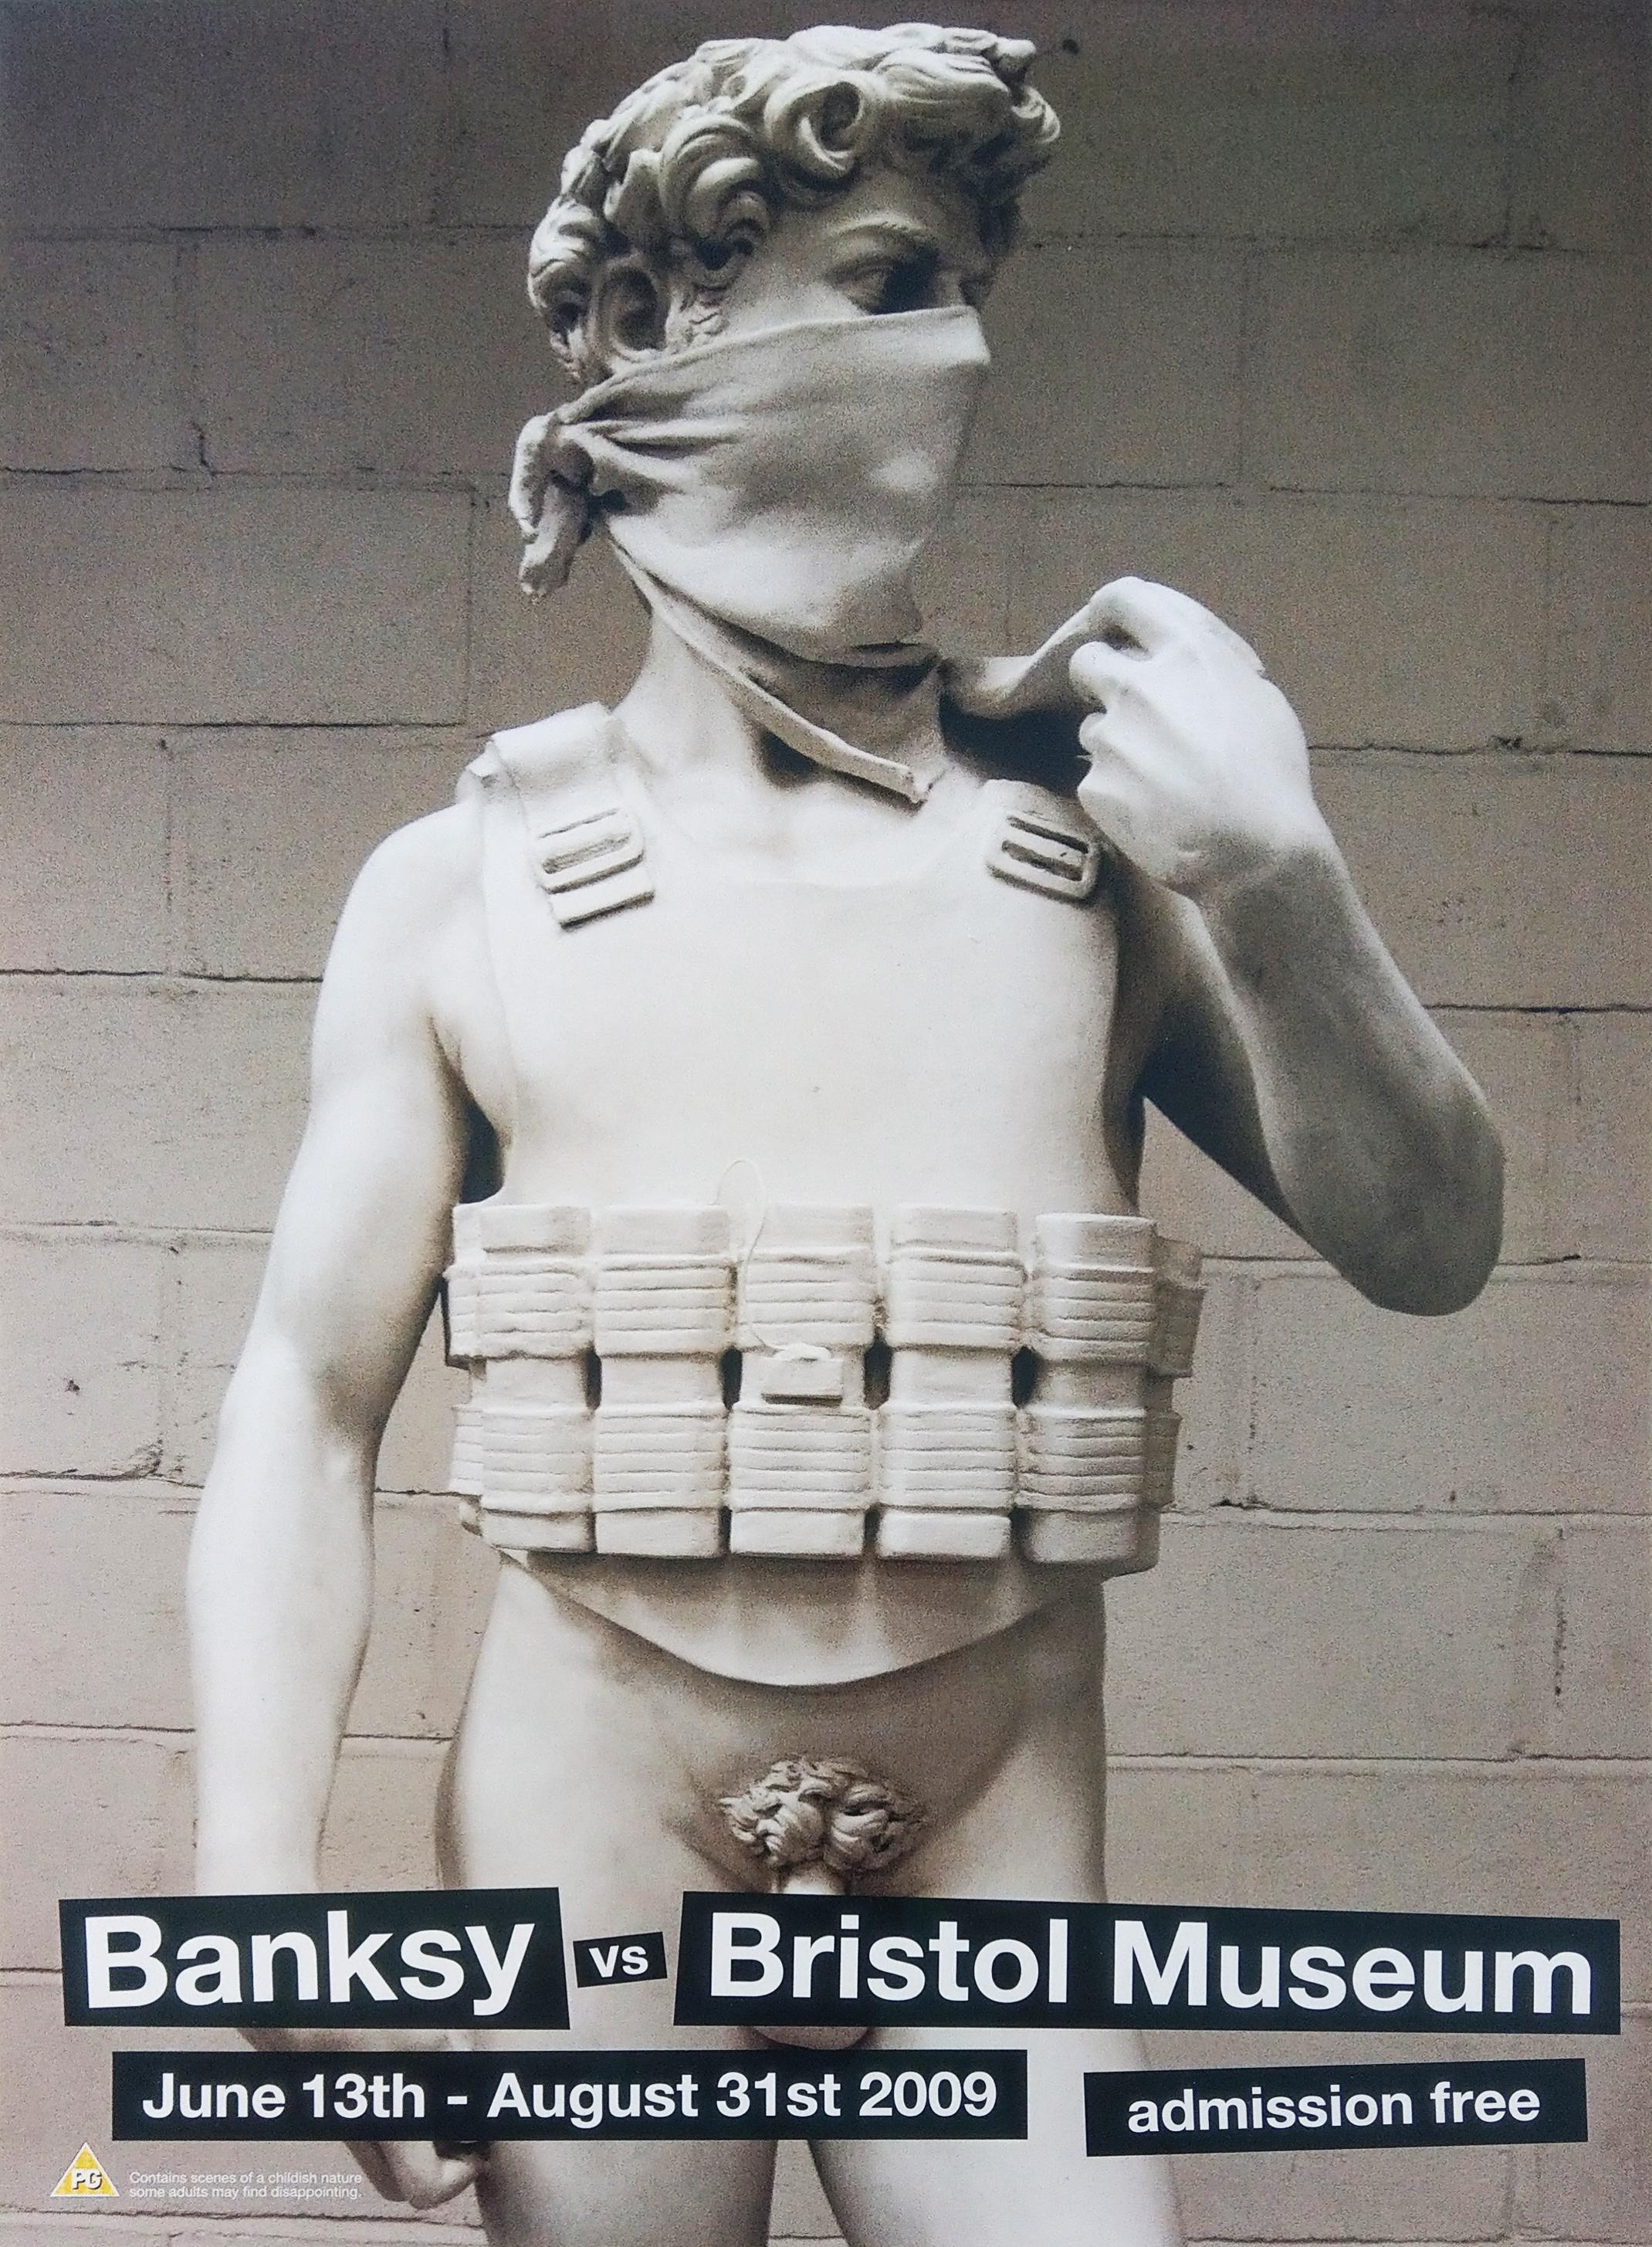 David Banksy vs Bristol Museum, Contemporary Art Show Poster